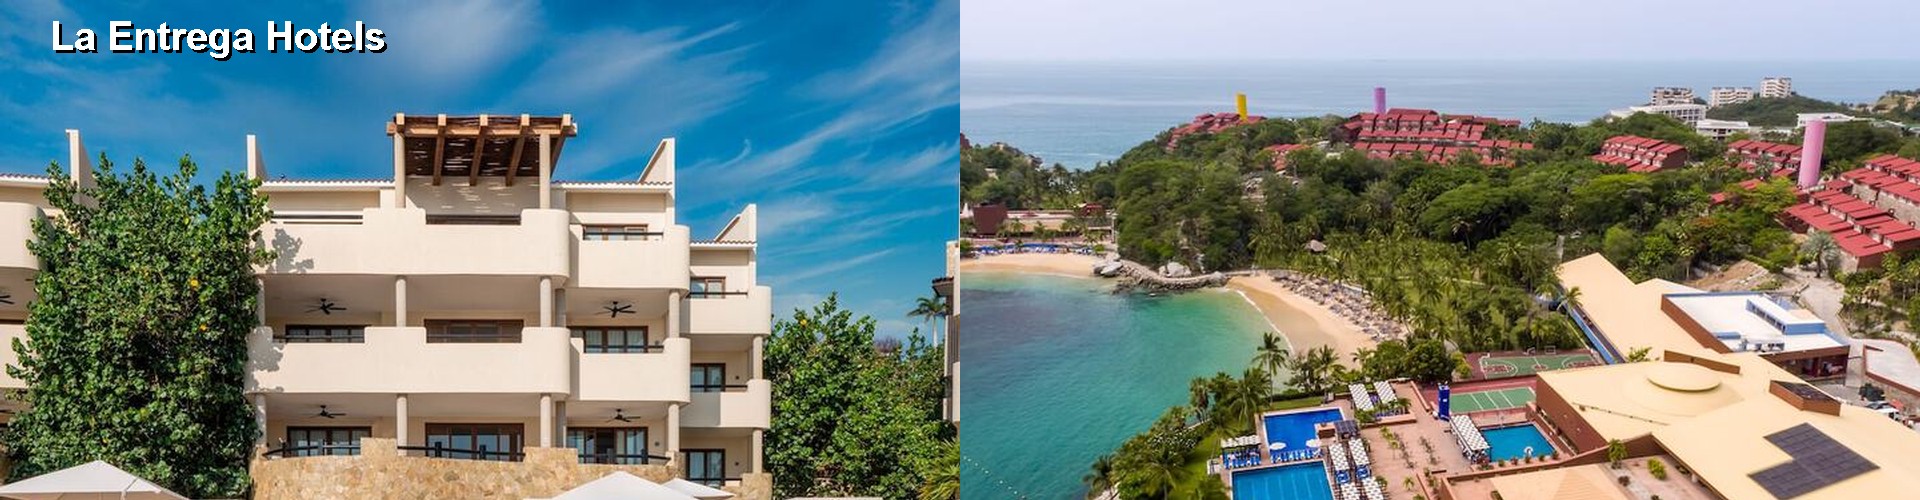 5 Best Hotels near La Entrega